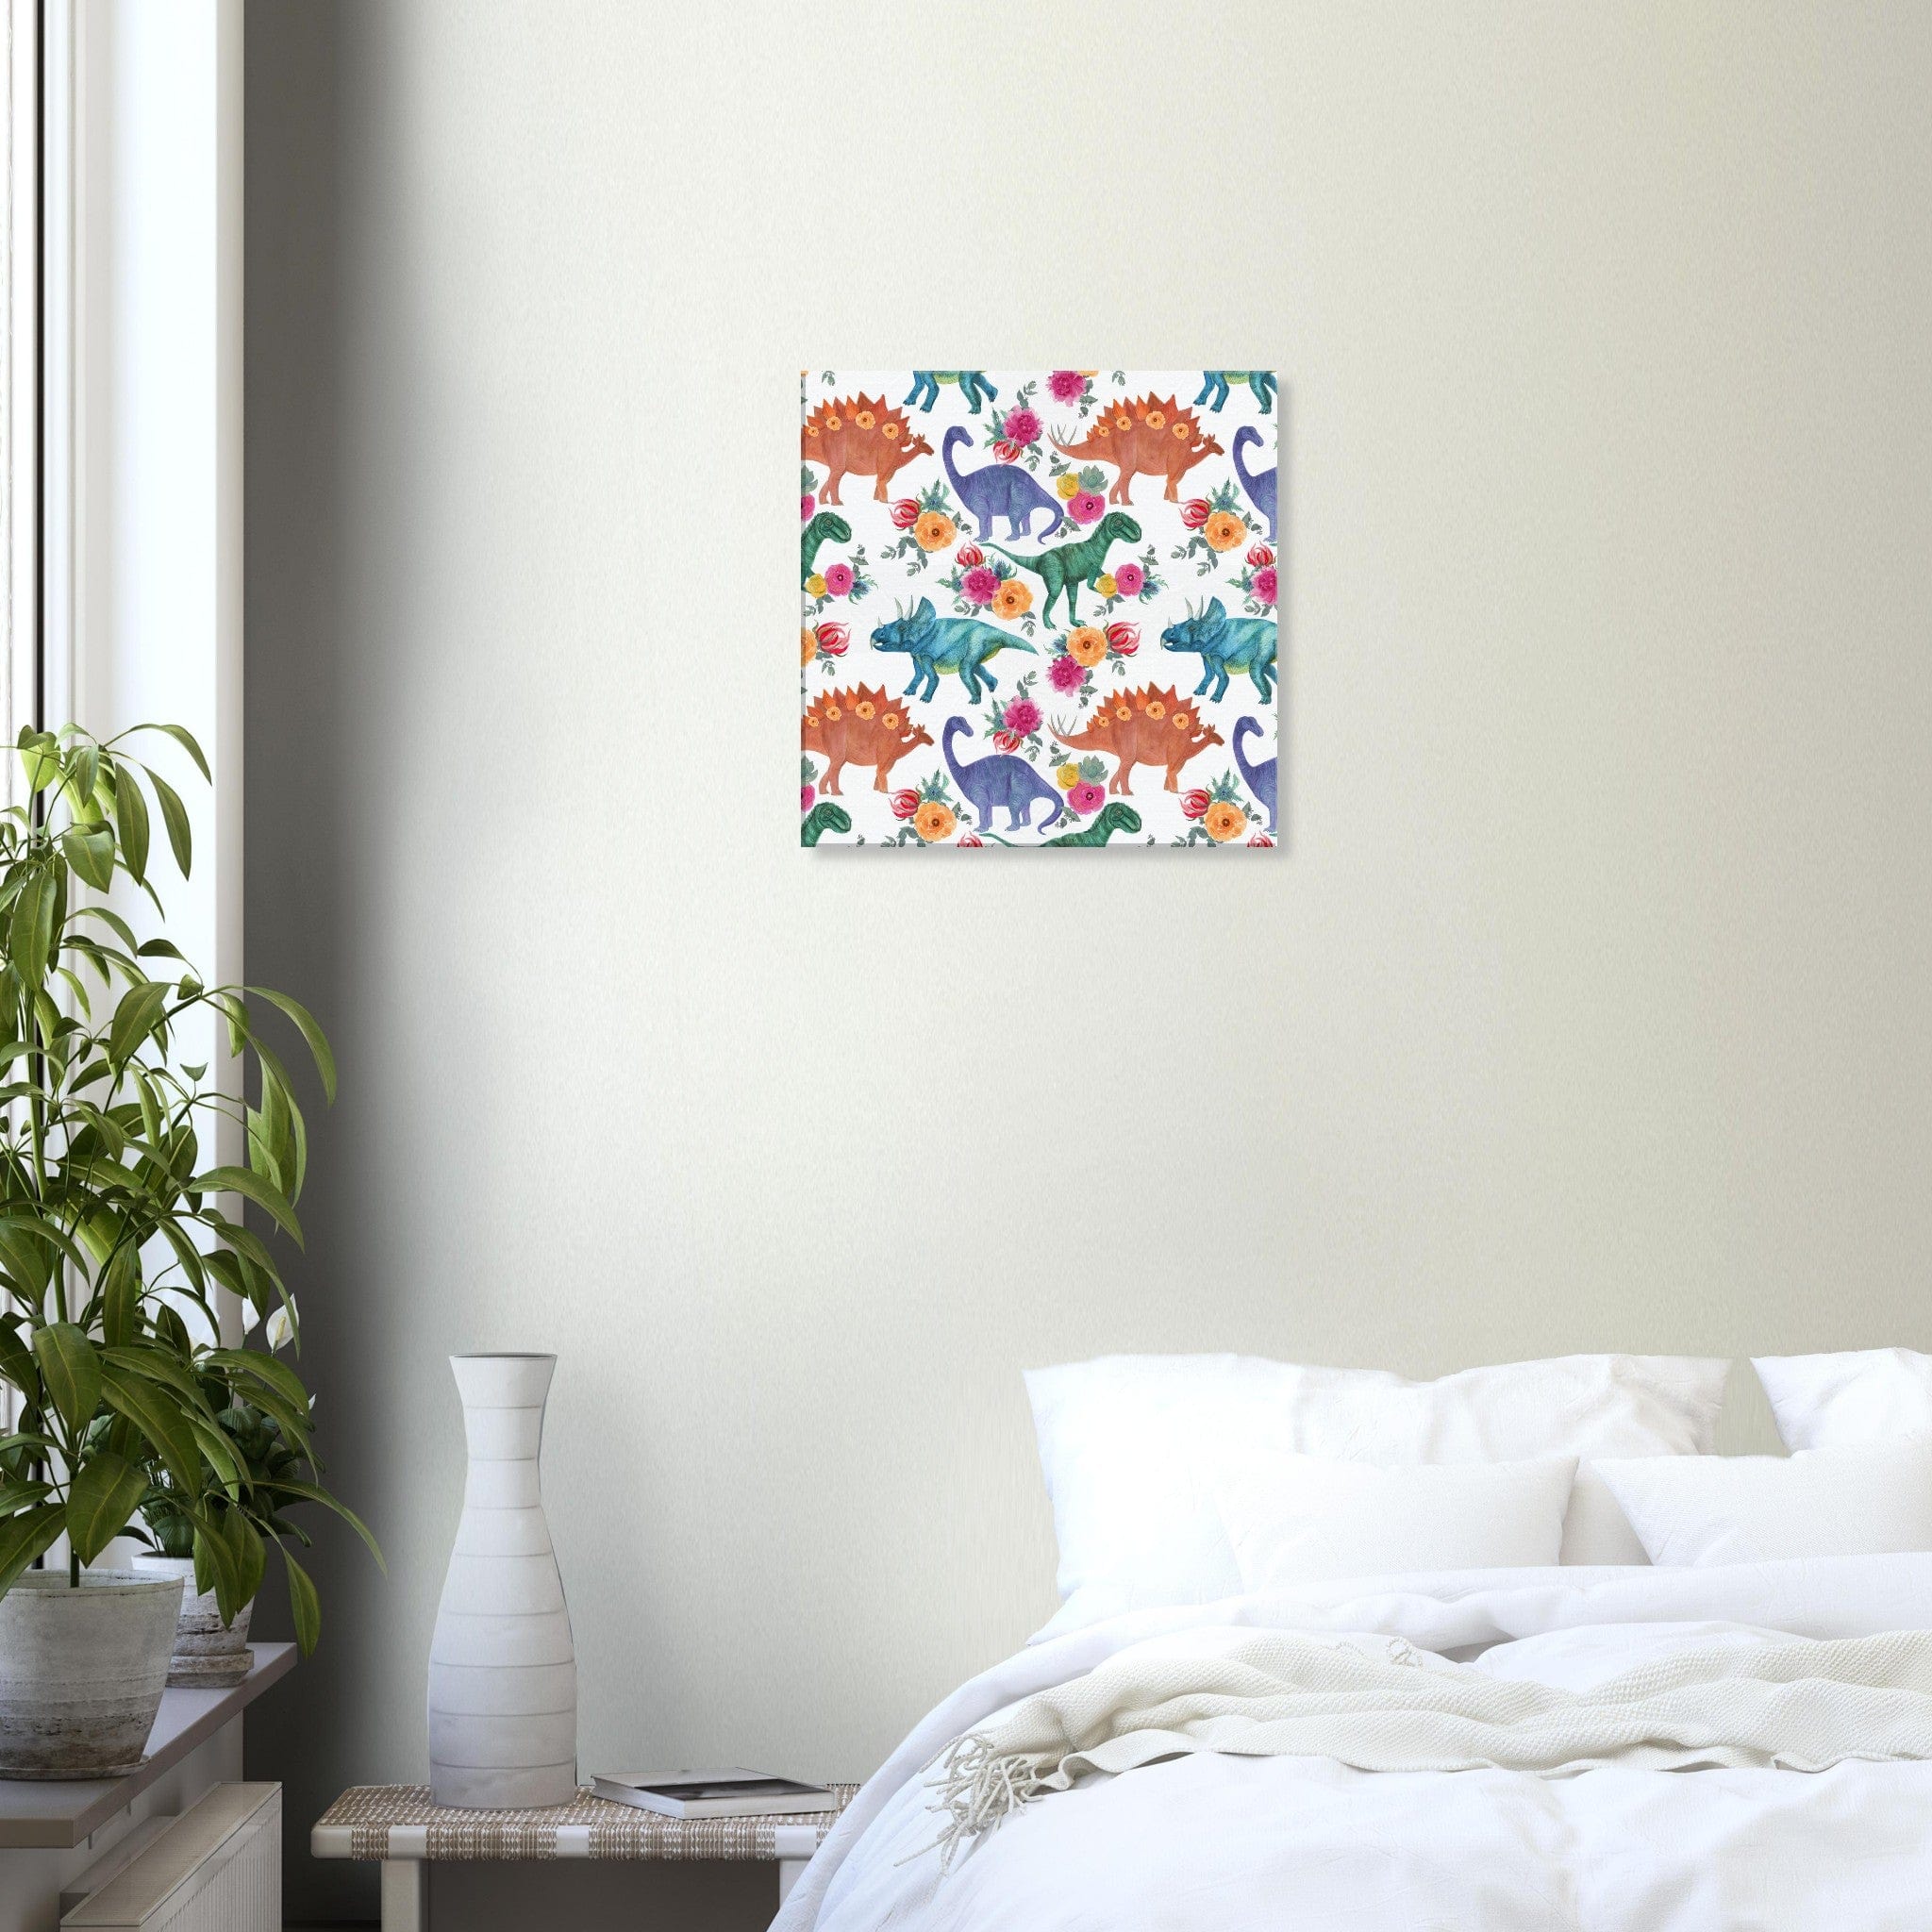 Little Squiffy Print Material 50x50 cm / 20x20″ / Horizontal Floral Dinosaurs Canvas Wall Art